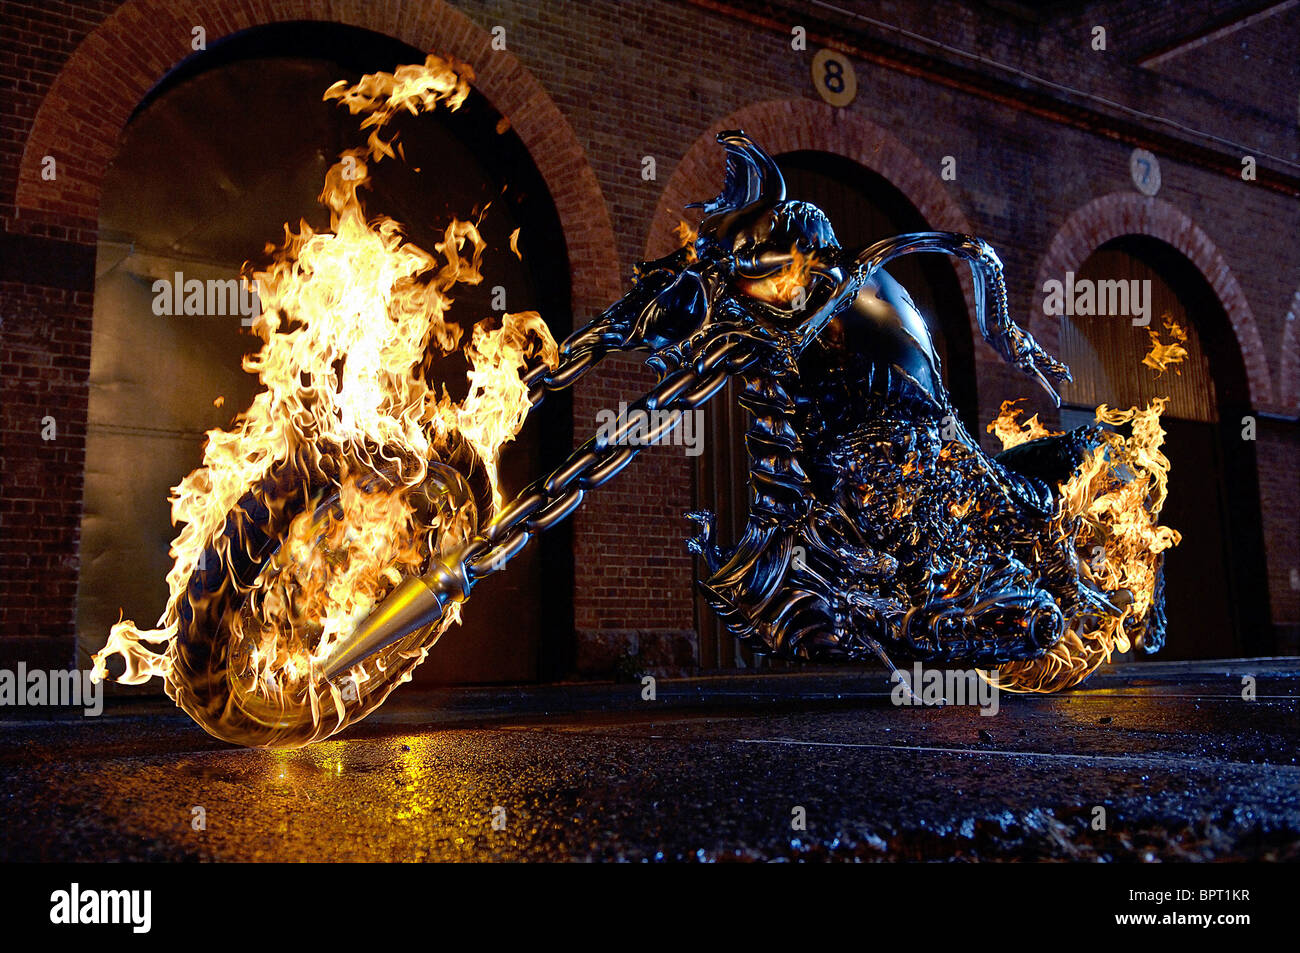 FLAMMENDEN MOTORRAD GHOST RIDER (2007 Stockfotografie - Alamy